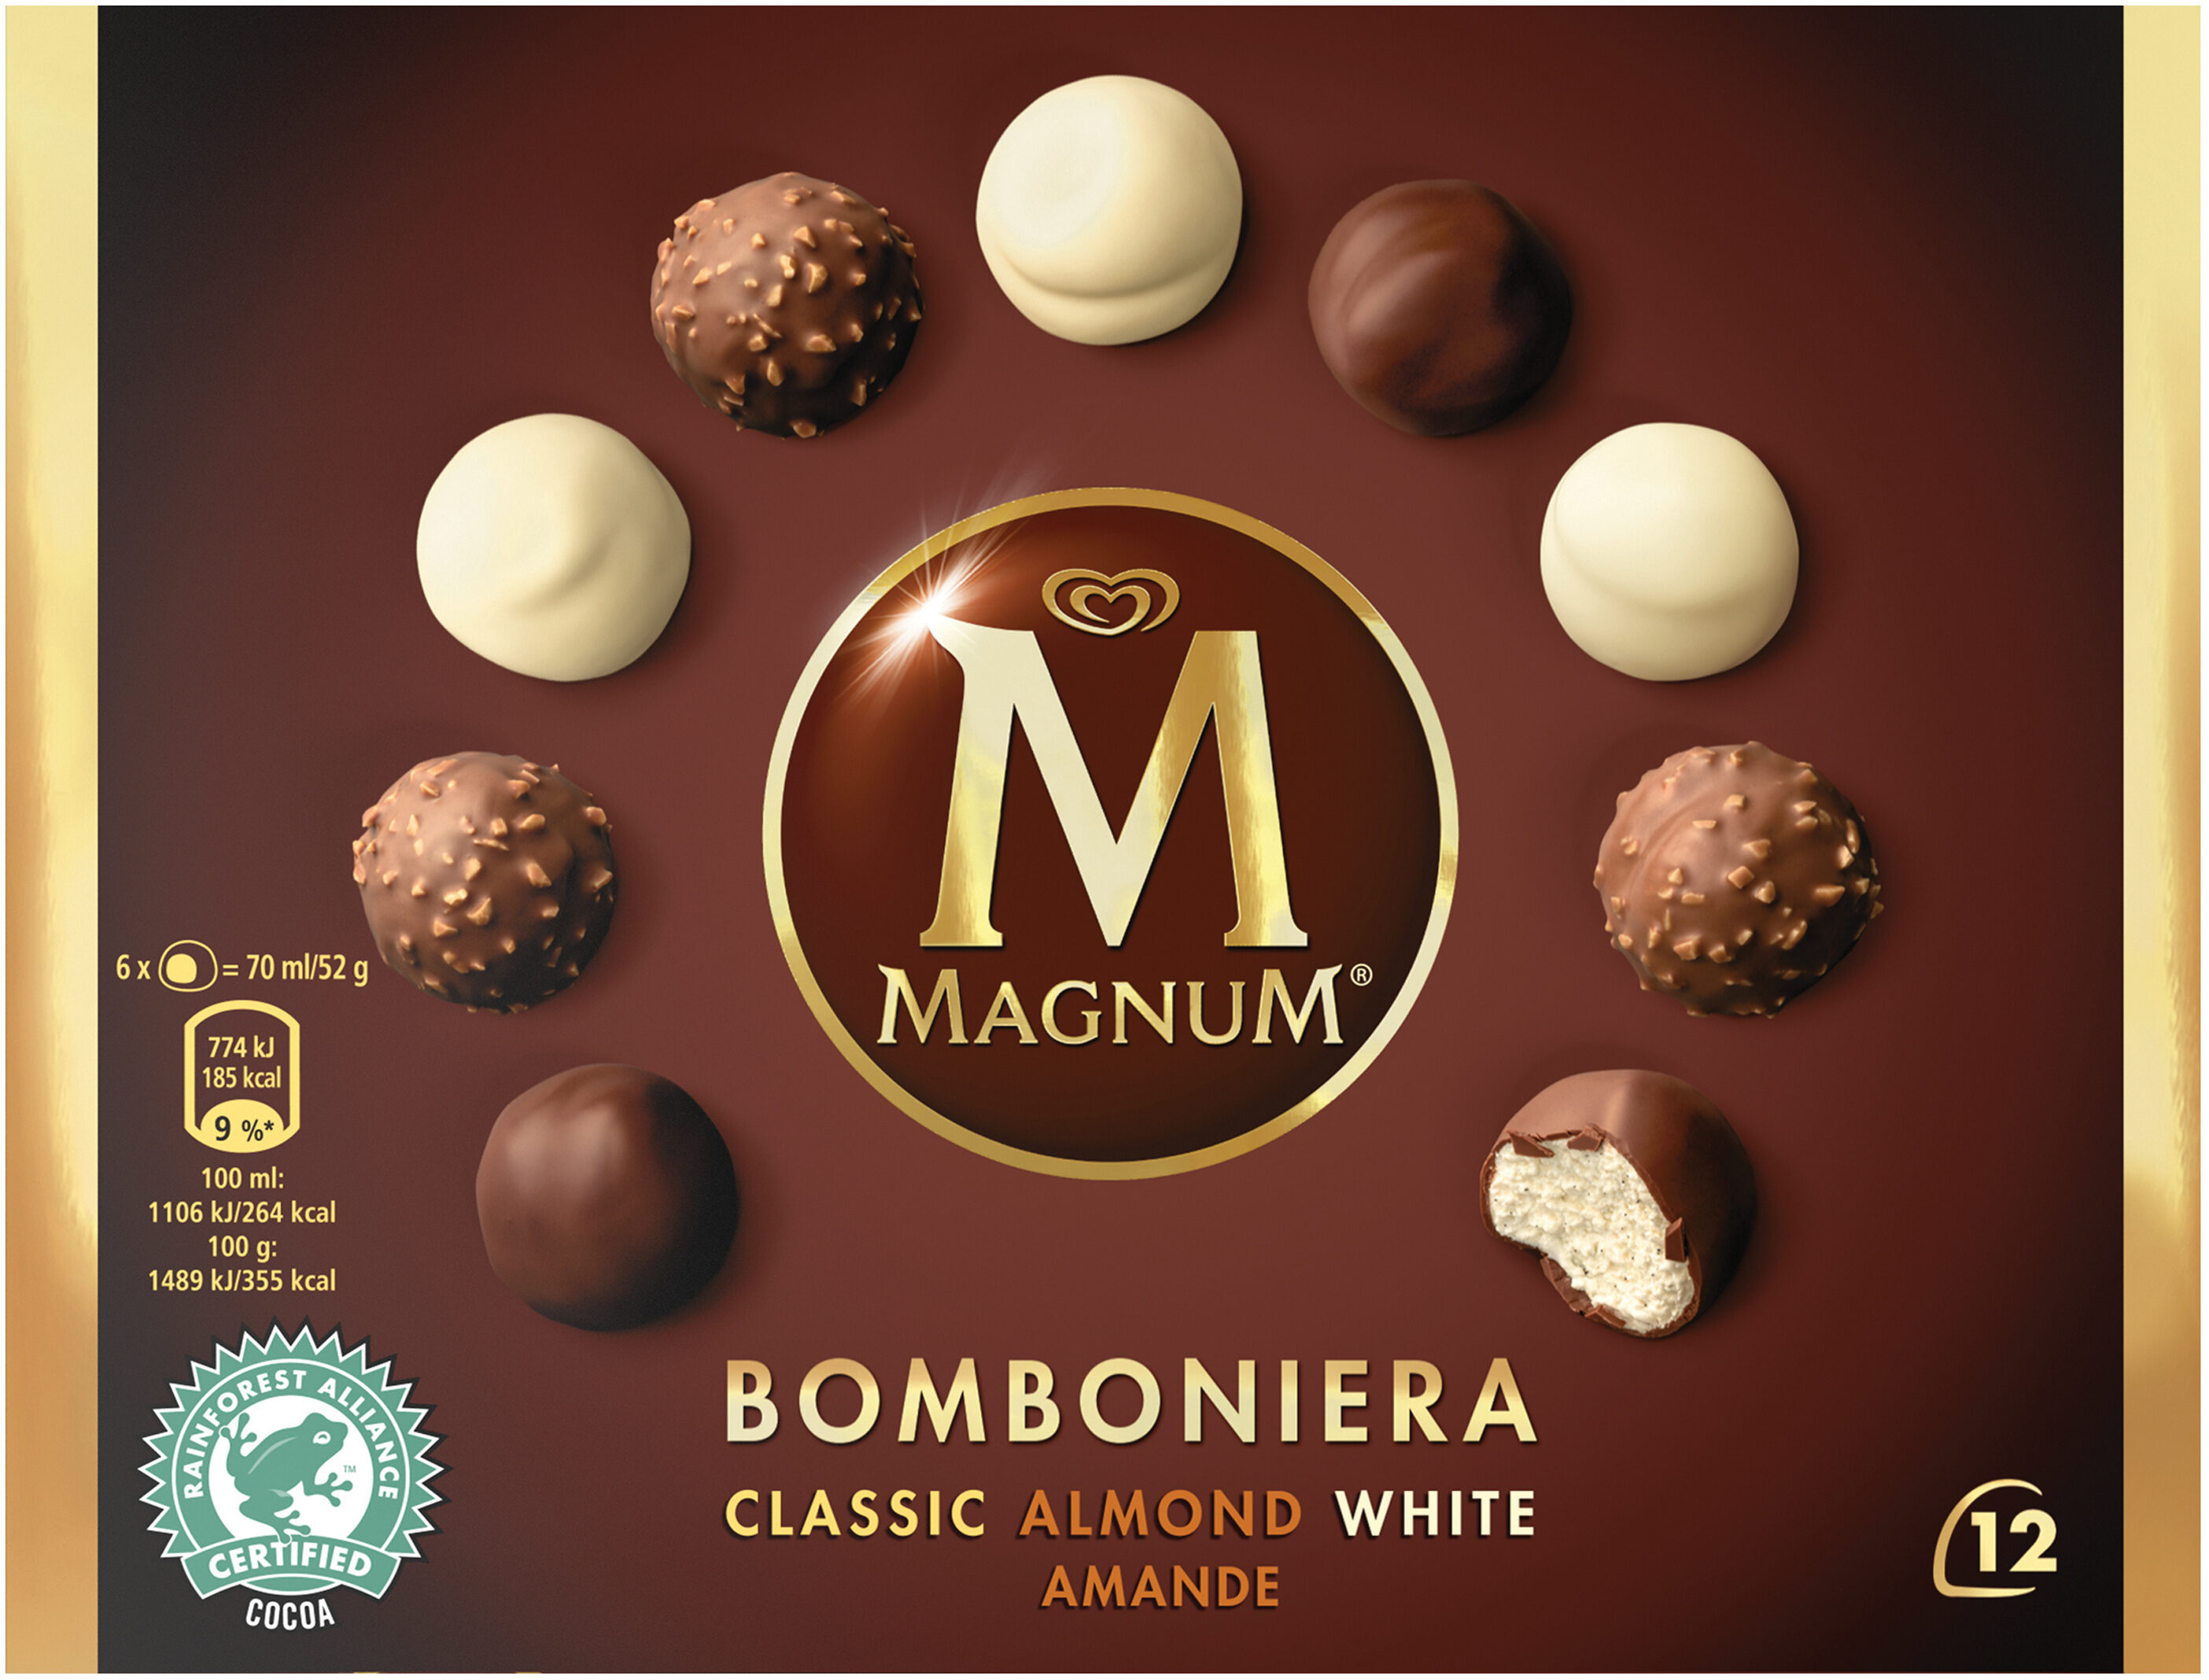 Bomboniera Classic Almond White - Producto - fr